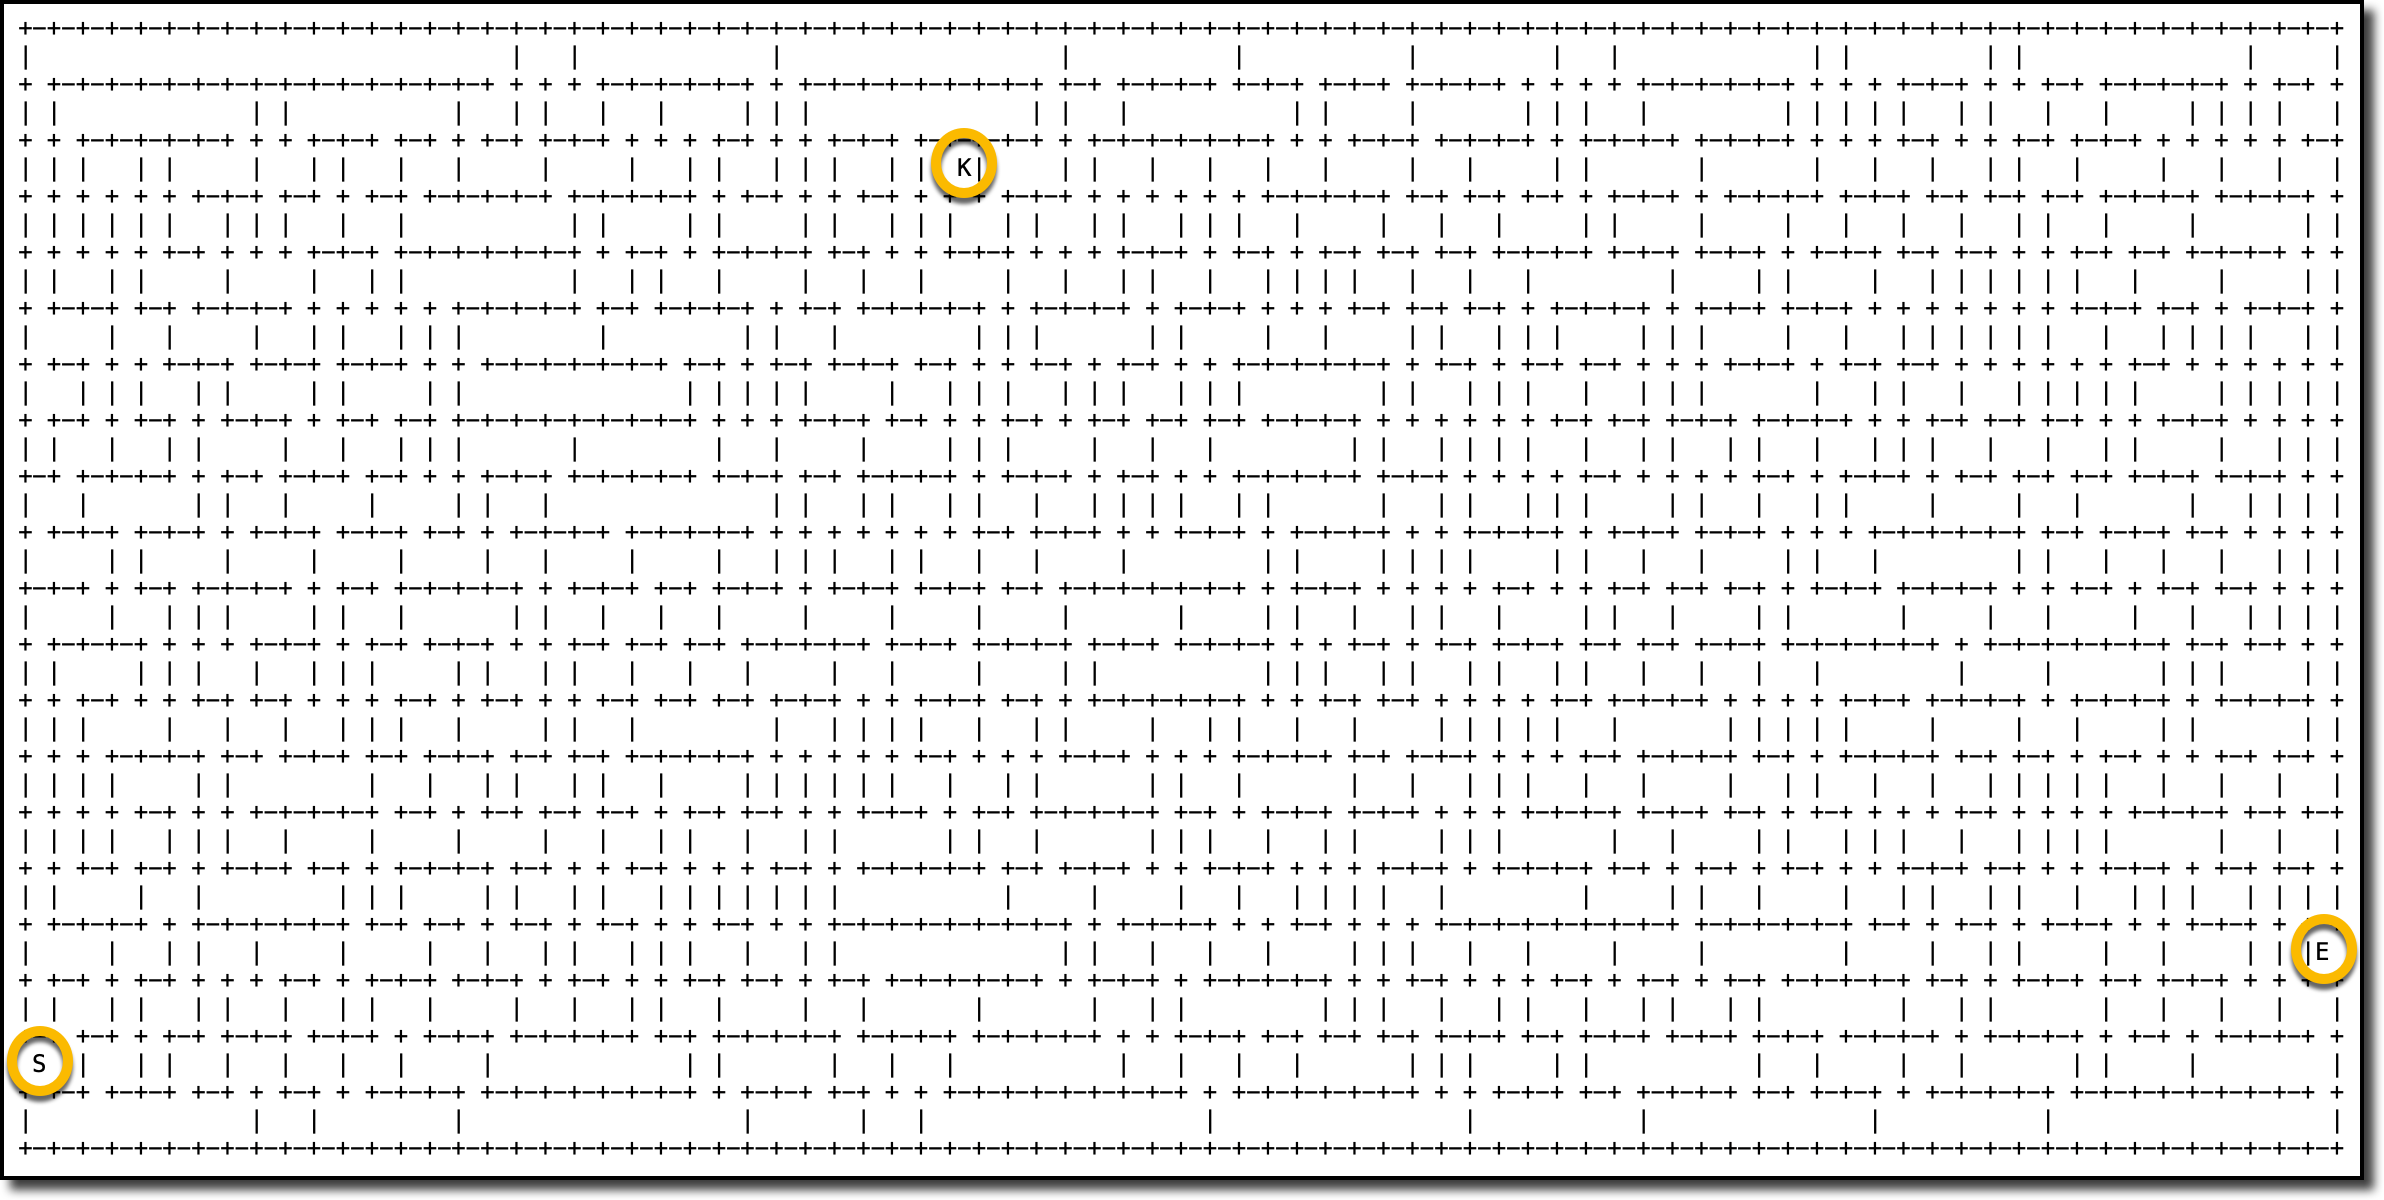 Sample ASCII maze map.